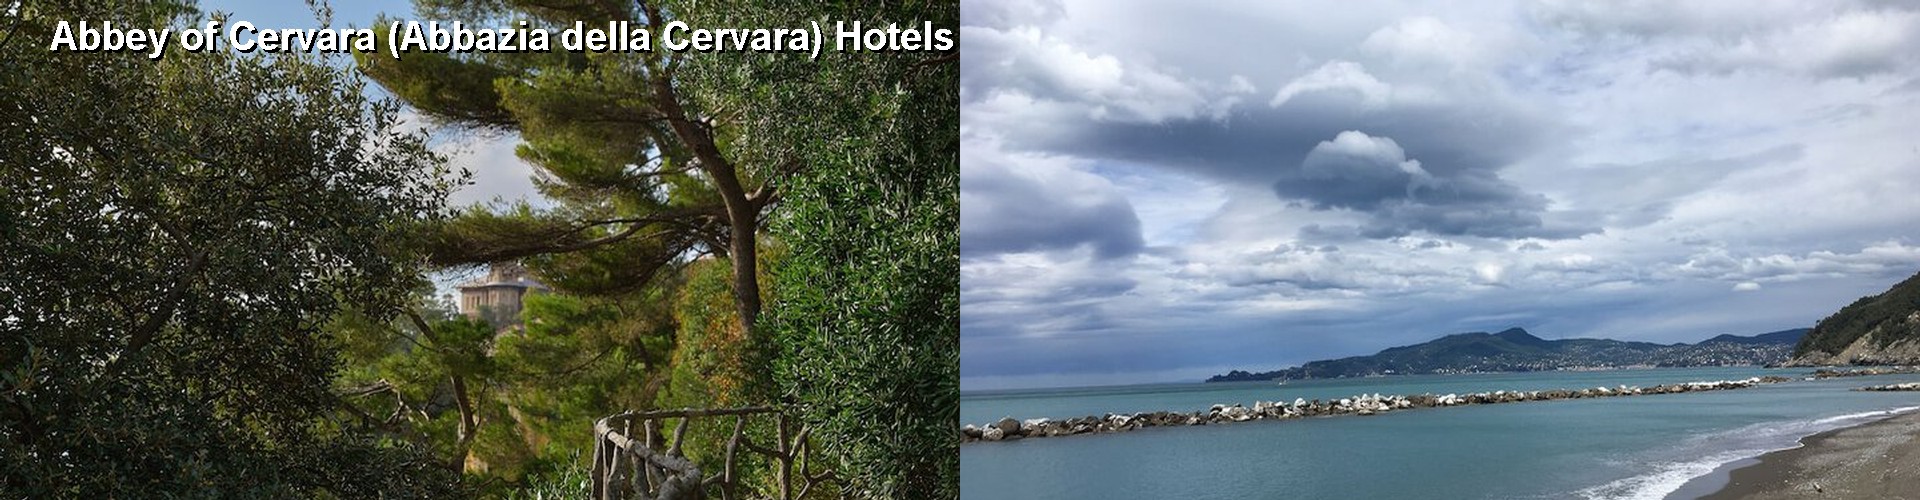 5 Best Hotels near Abbey of Cervara (Abbazia della Cervara)